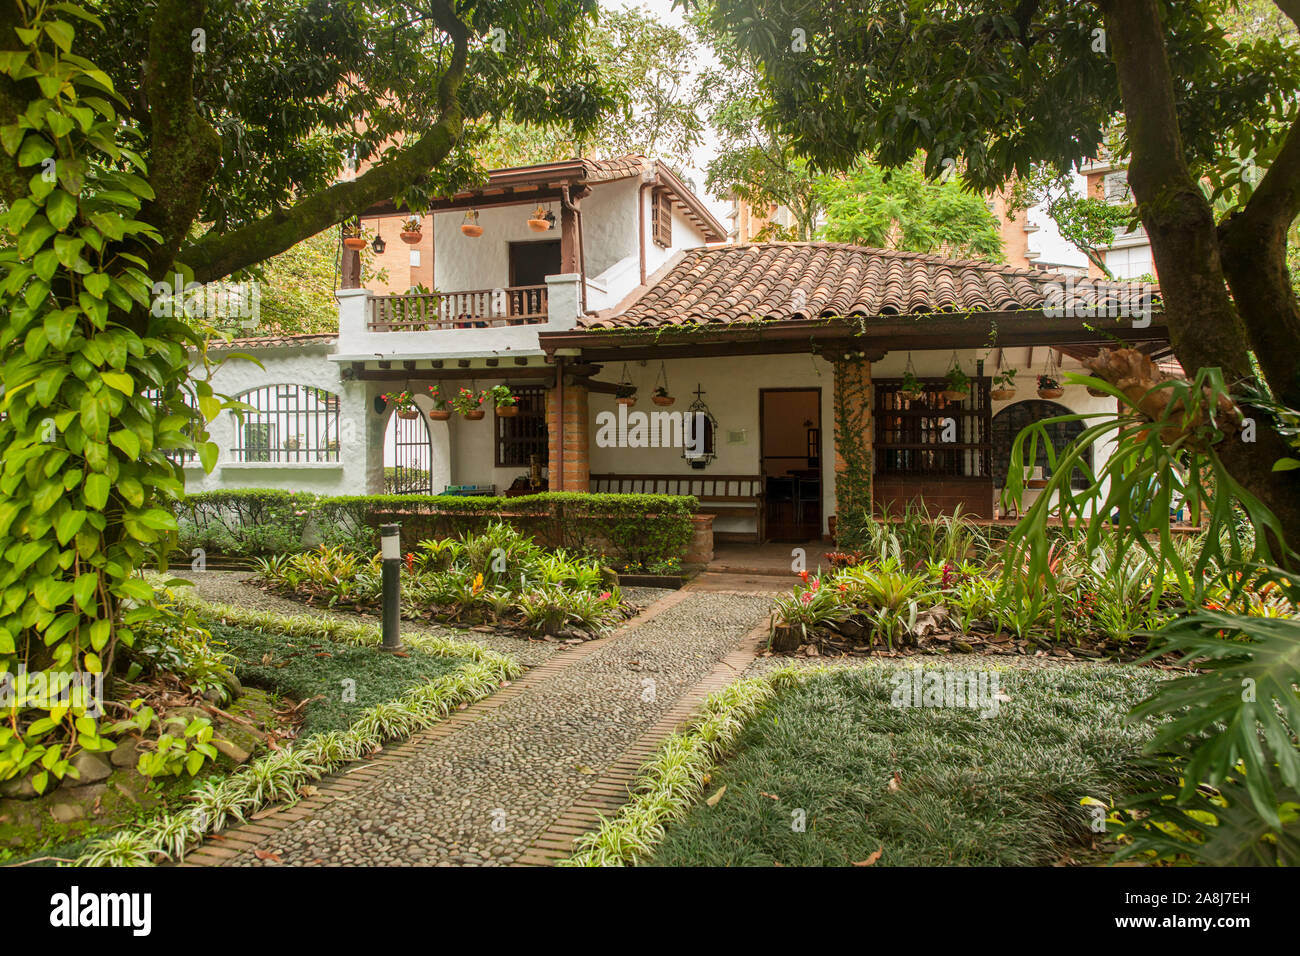 Garden and buildings of the Casa Museo Otraprte museum dedicated to Fernando González in Envigado, Colombia. Stock Photo